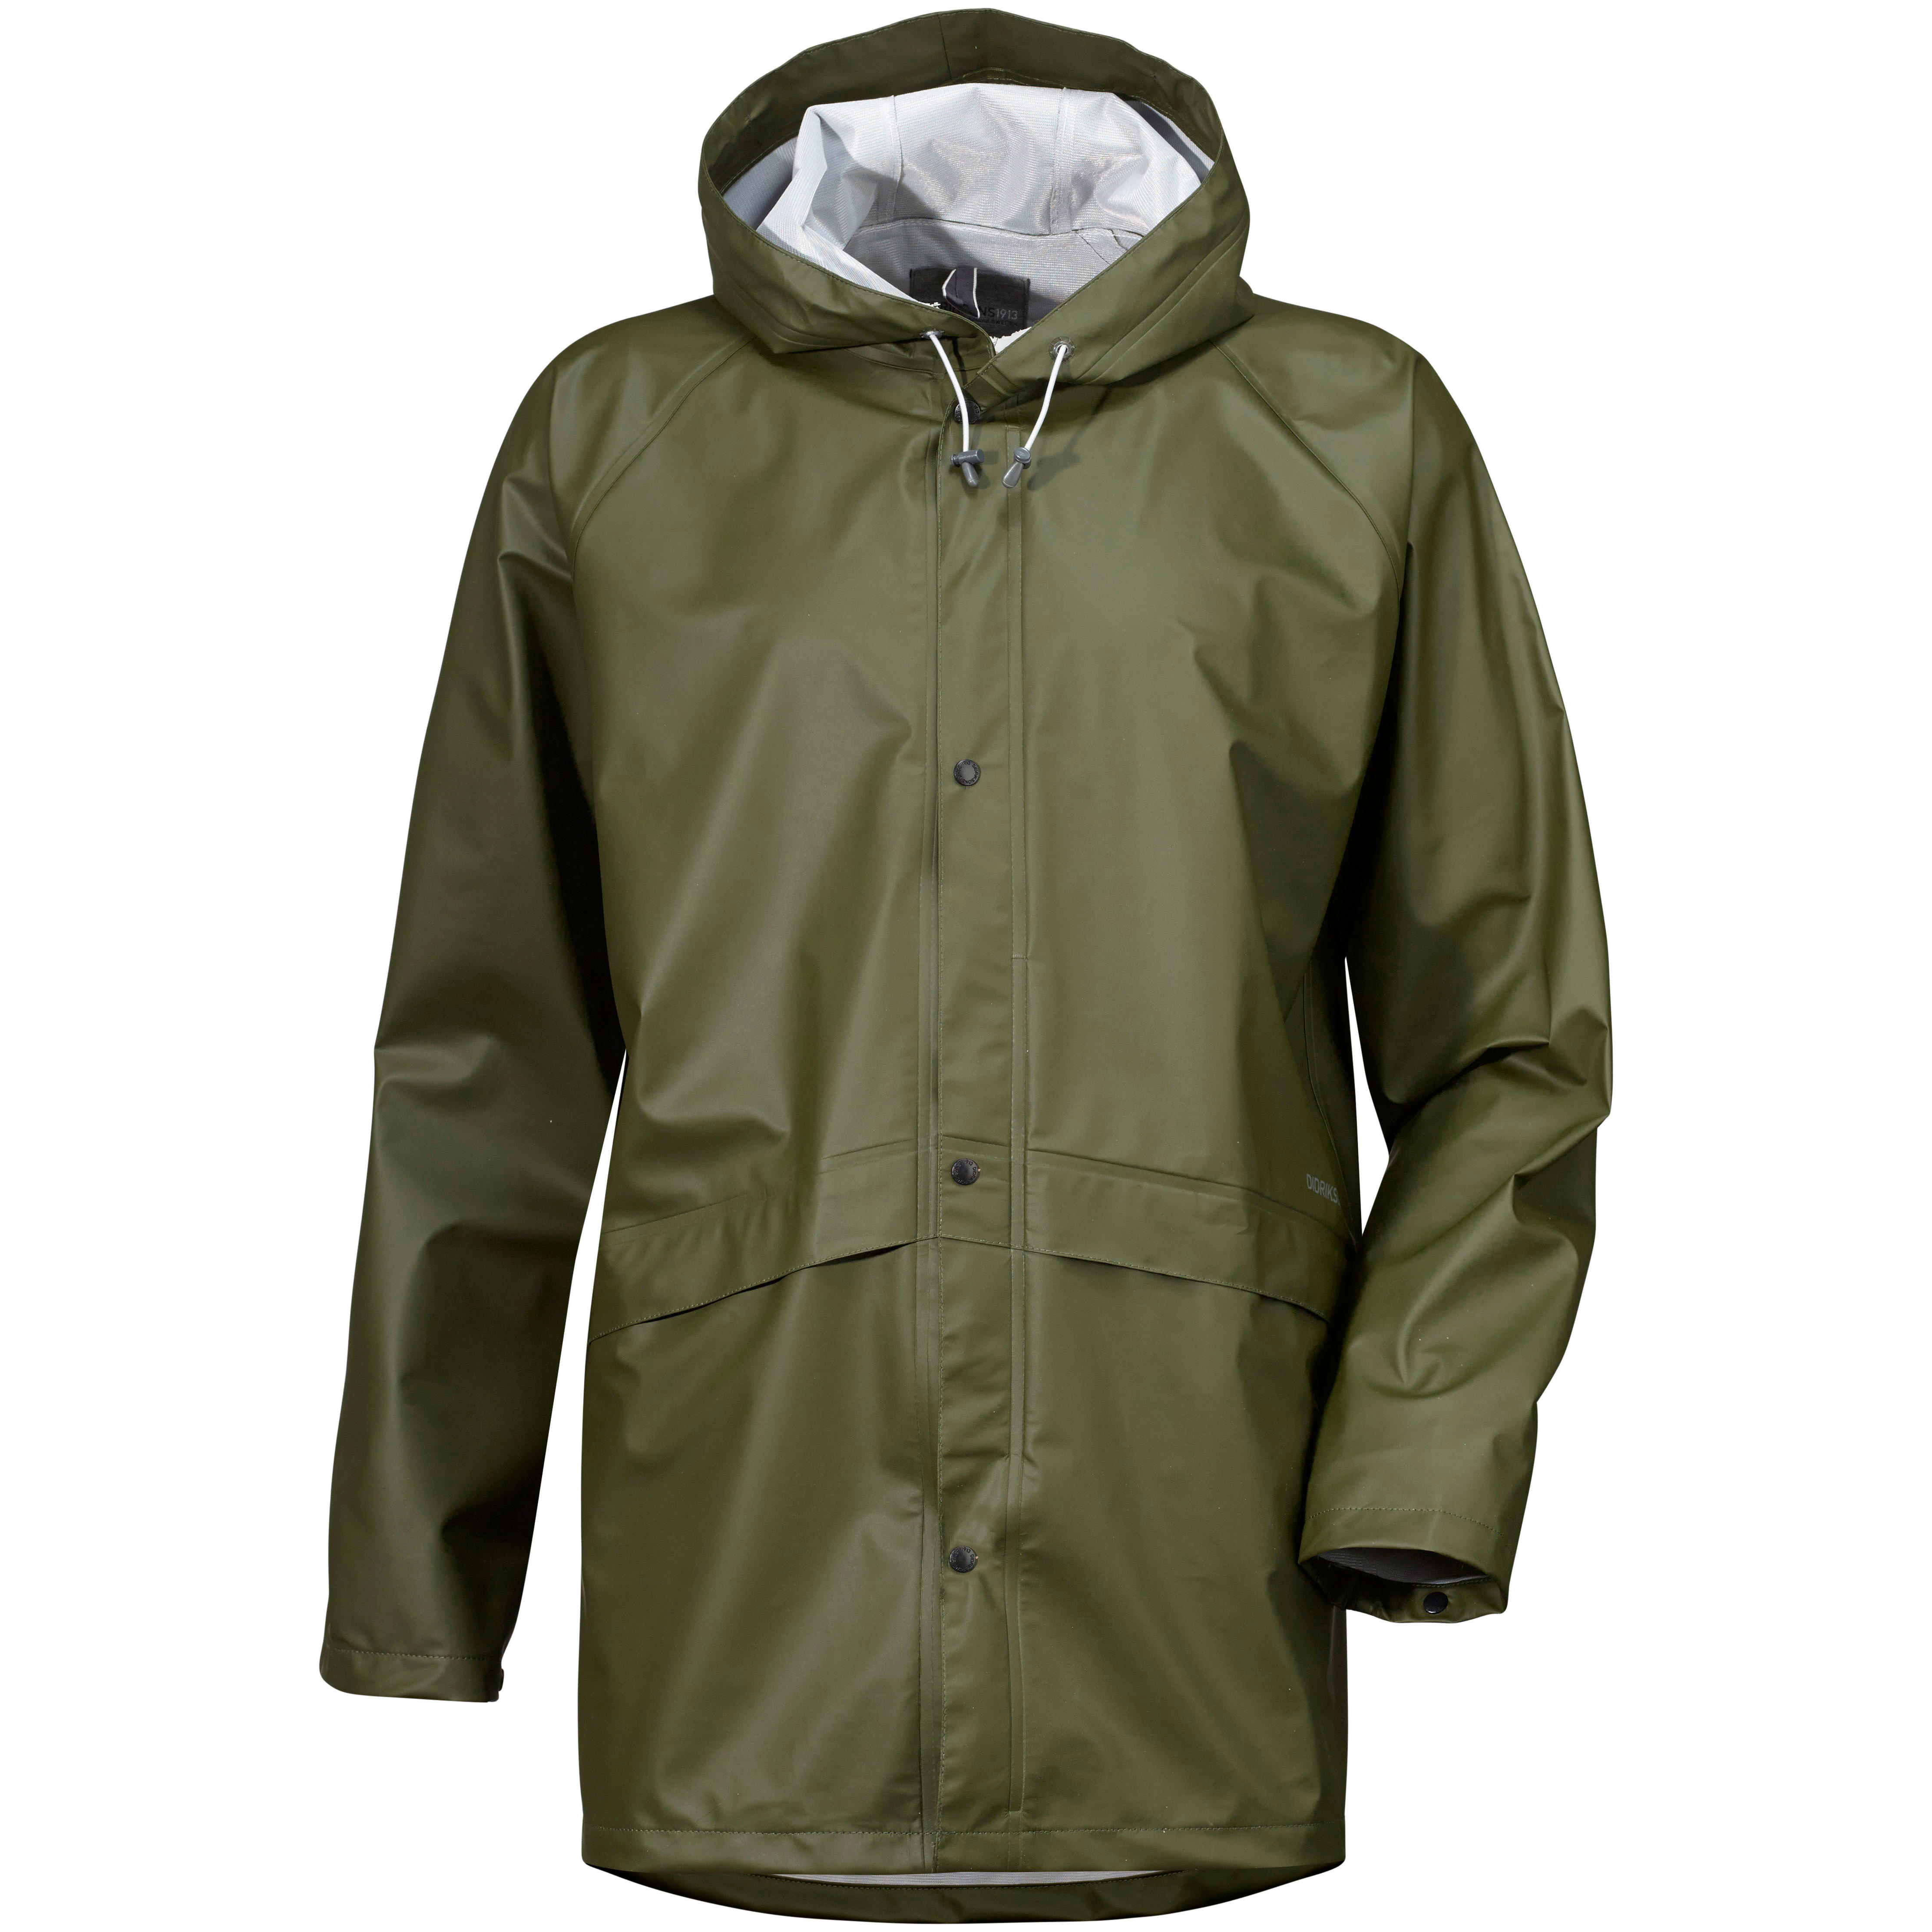 Didriksons hidrófuga chaqueta Avon Men's Jacket burdeos viento densamente impermeable 